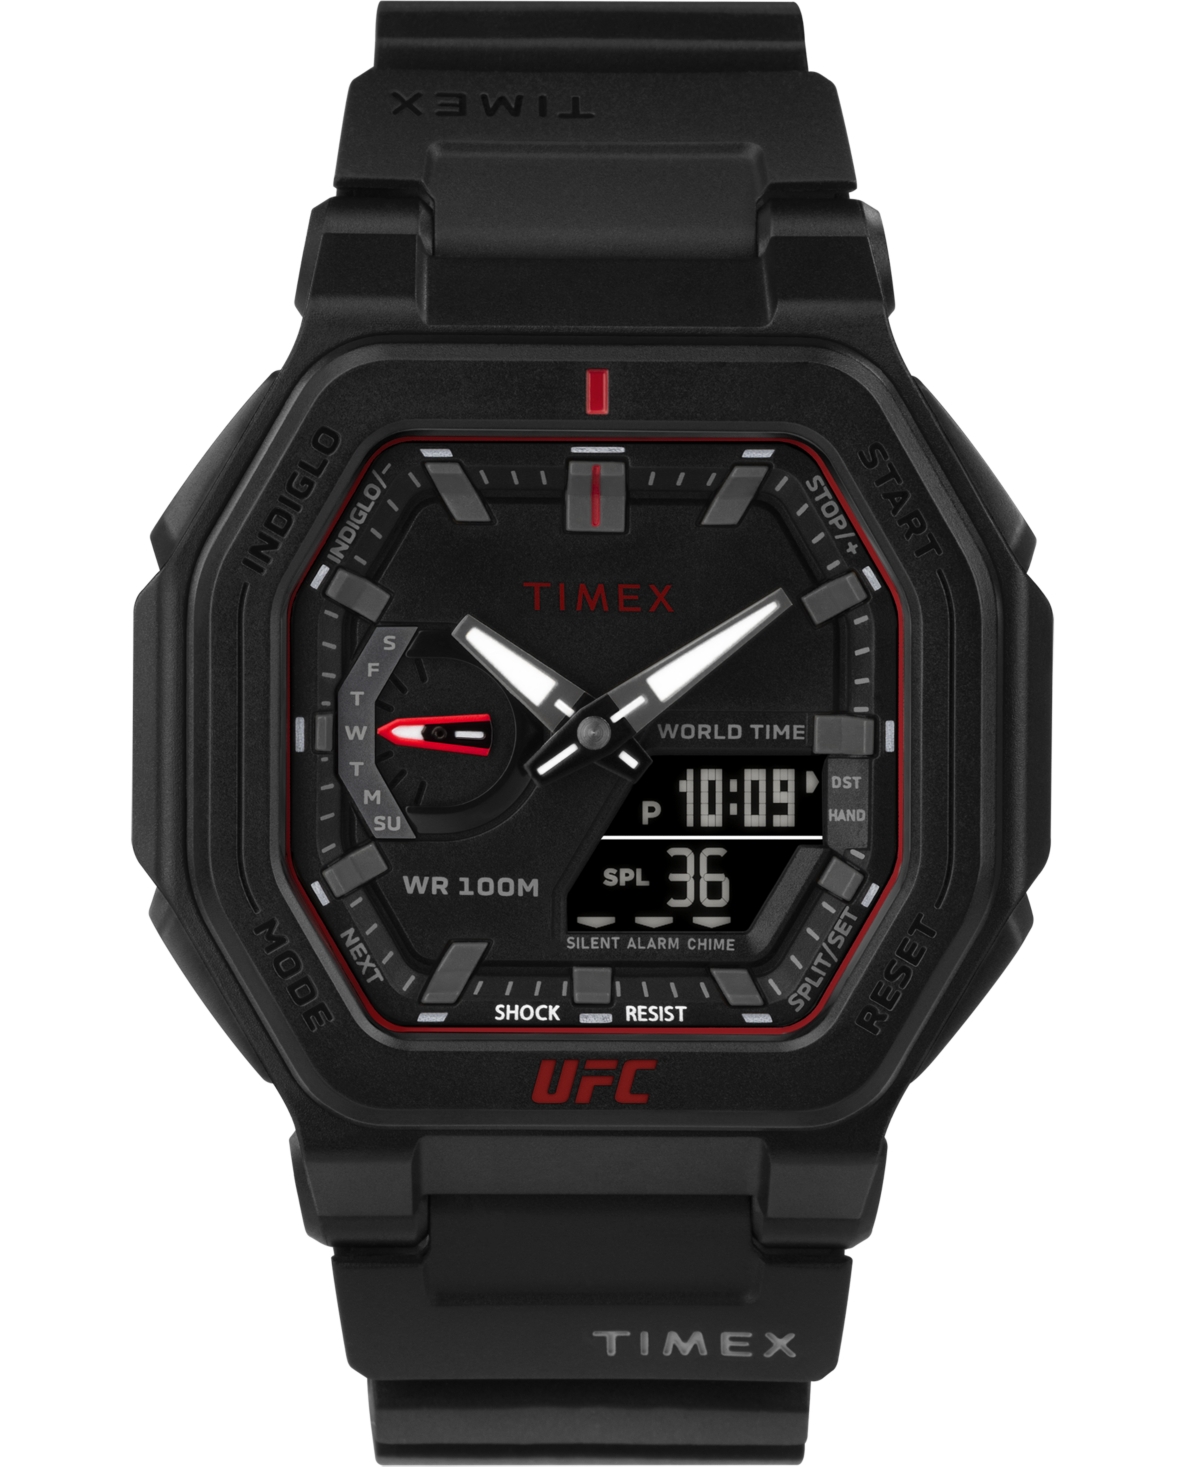 Ufc Men's Quartz Colossus Resin Black Watch, 45mm - Black